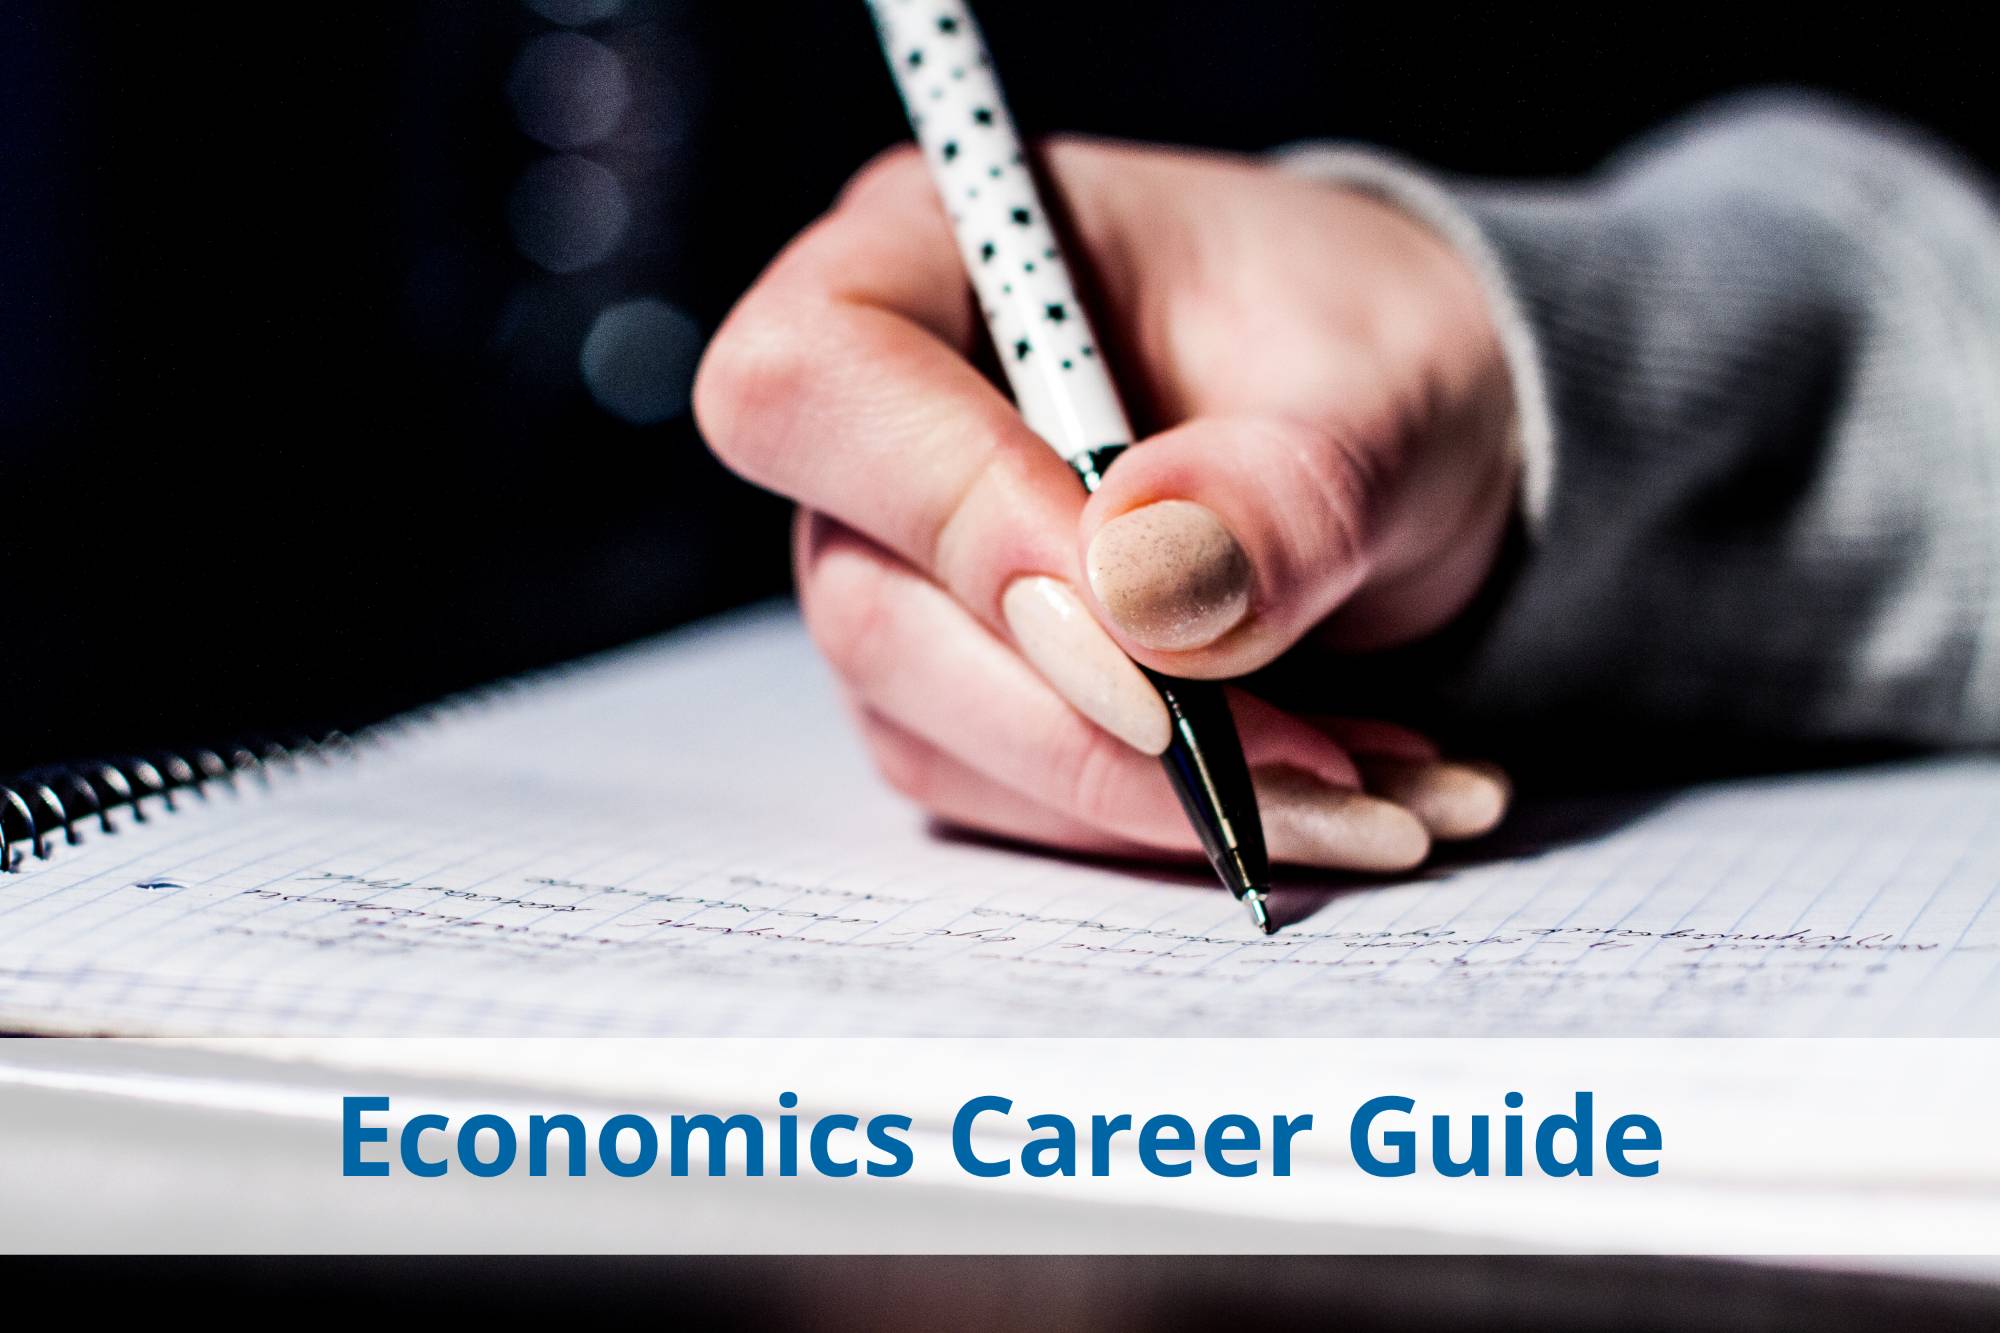 Economics career guide